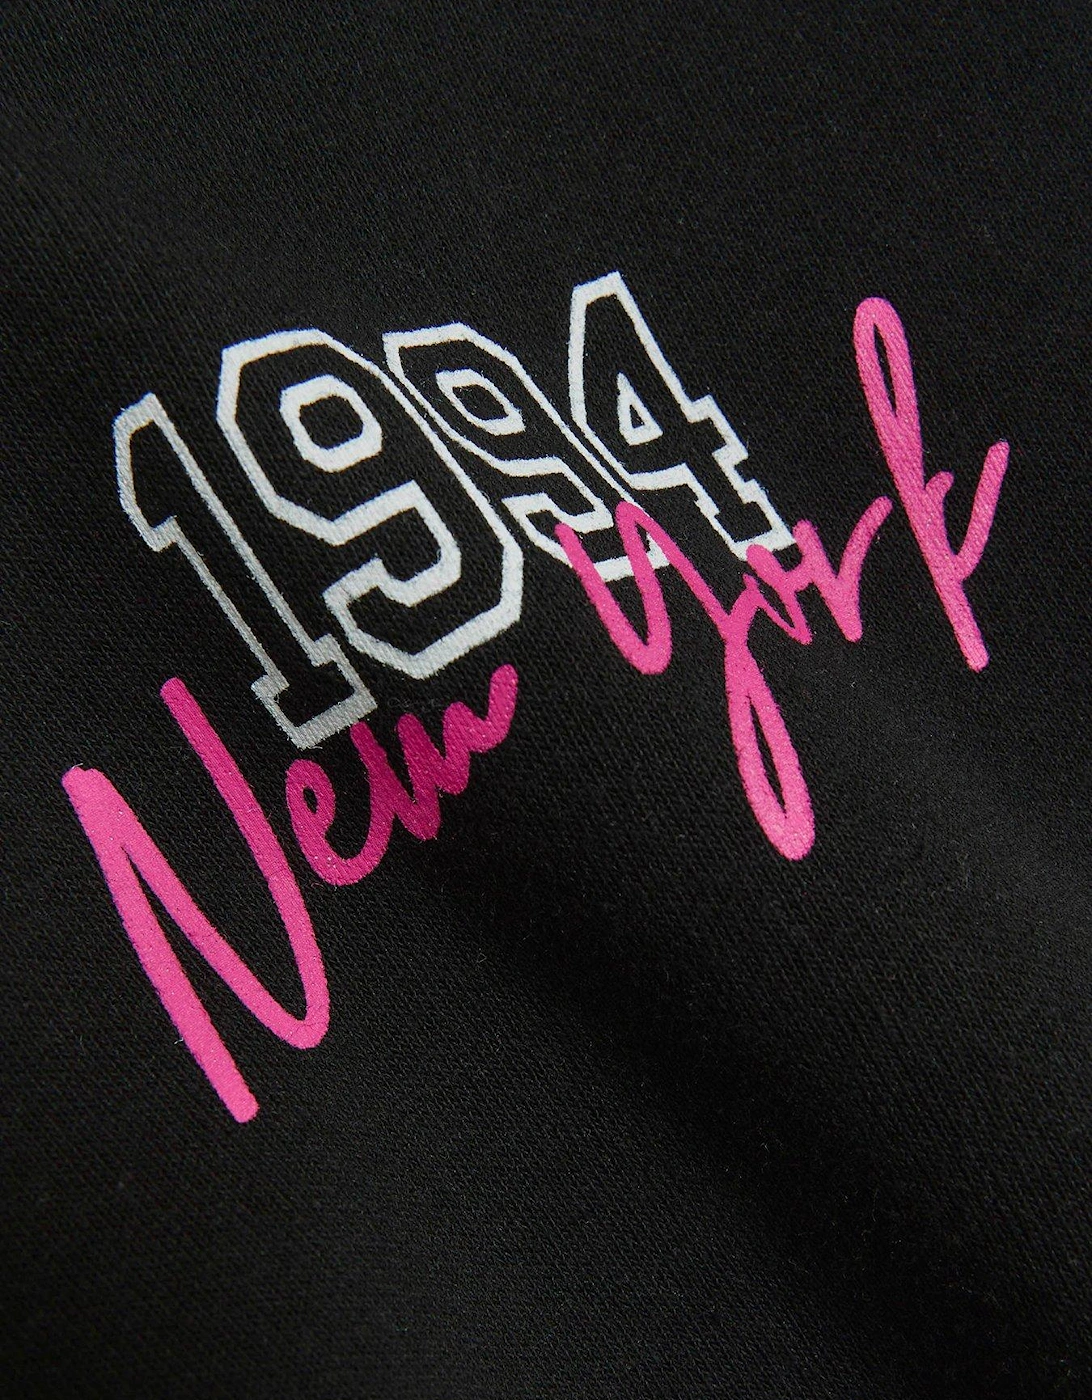 Girls Brooklyn Sweatshirt Set - Black